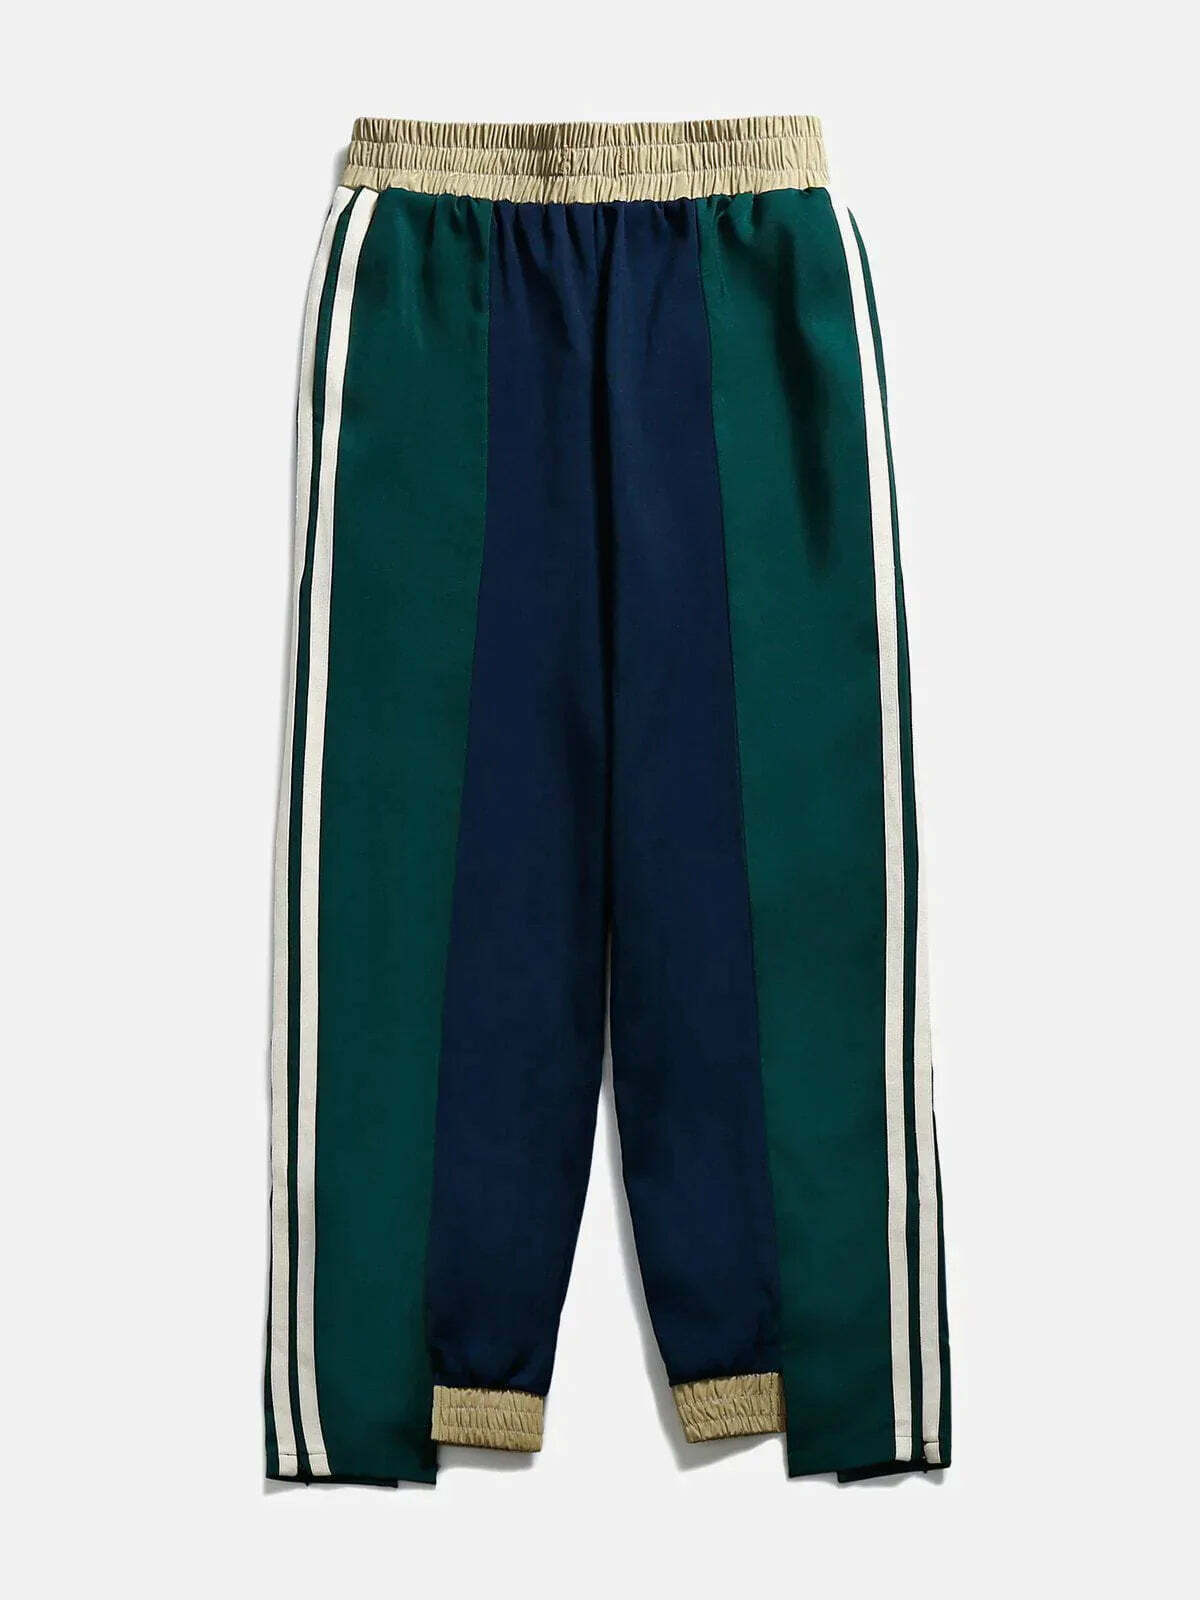 colorblock panel seam pants edgy streetwear essential 3997